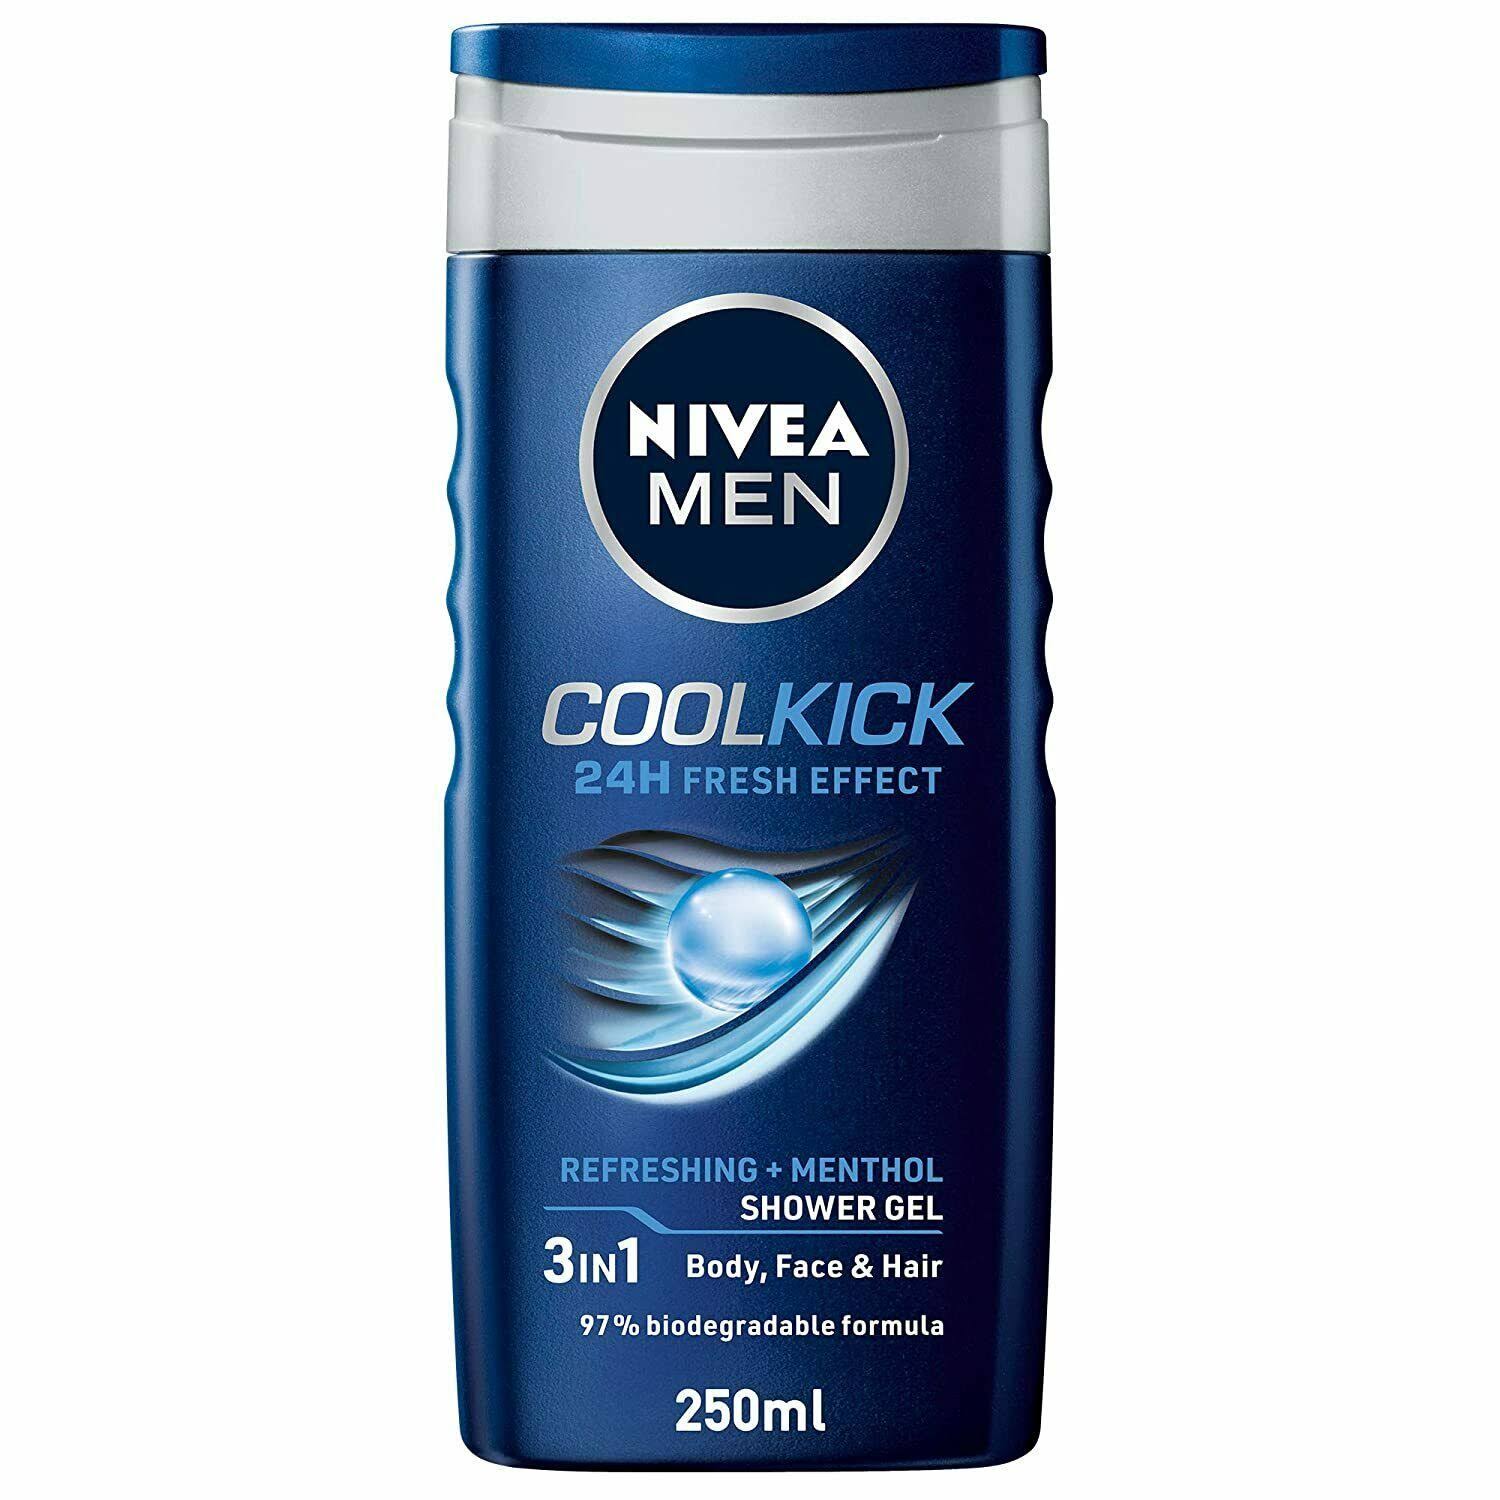 Nivea Men Cool Kick Shower Gel - 250ml